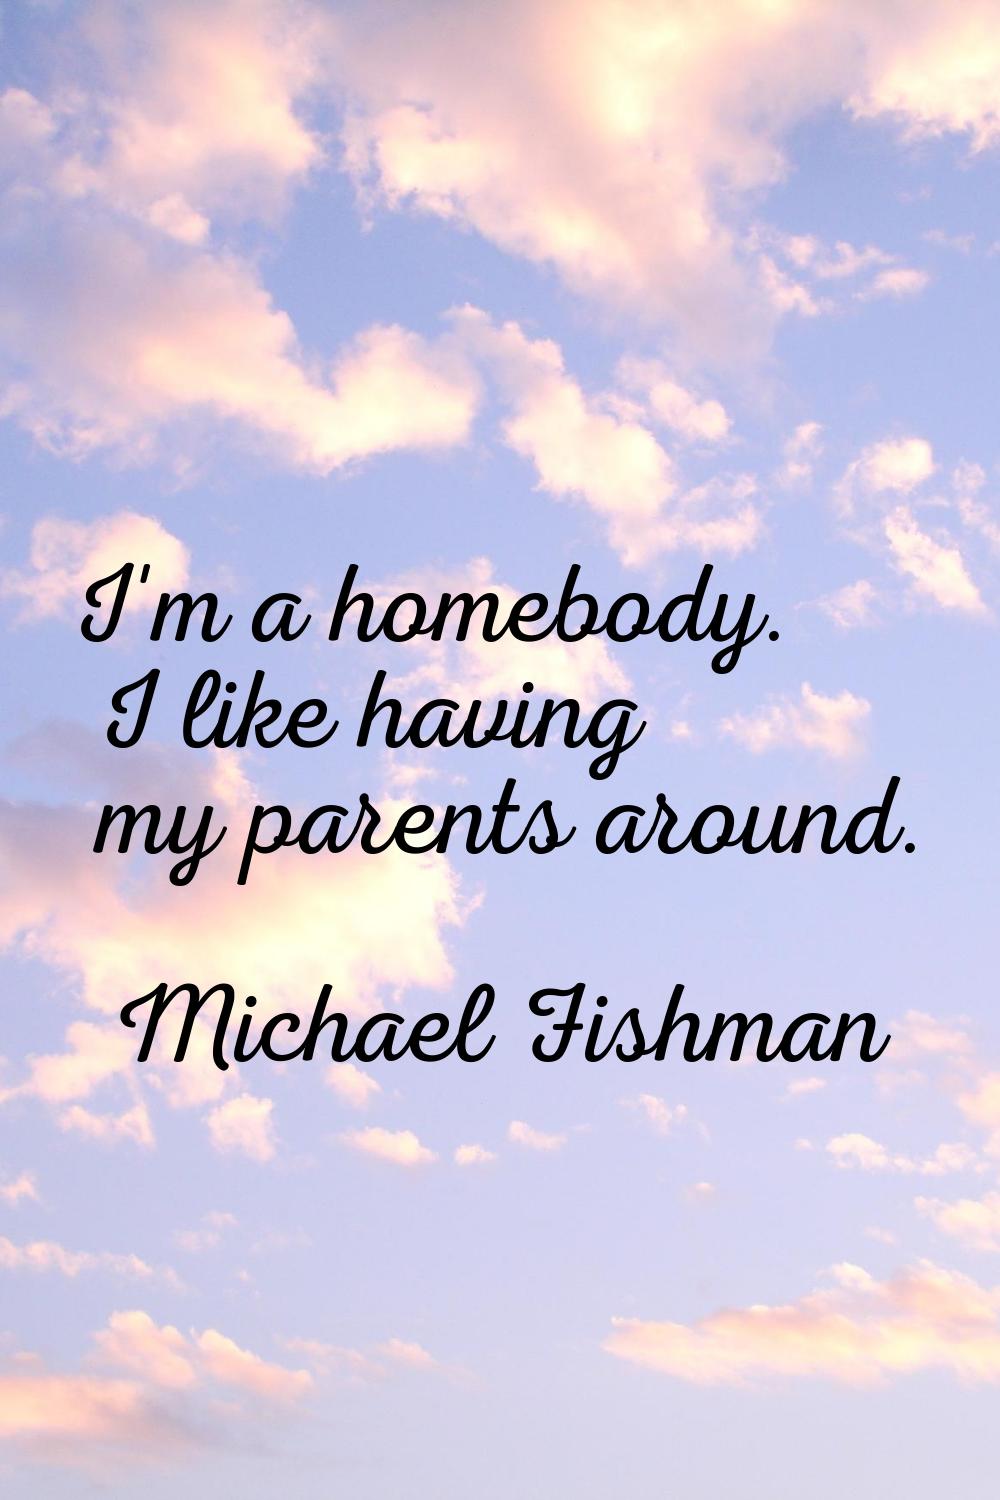 I'm a homebody. I like having my parents around.